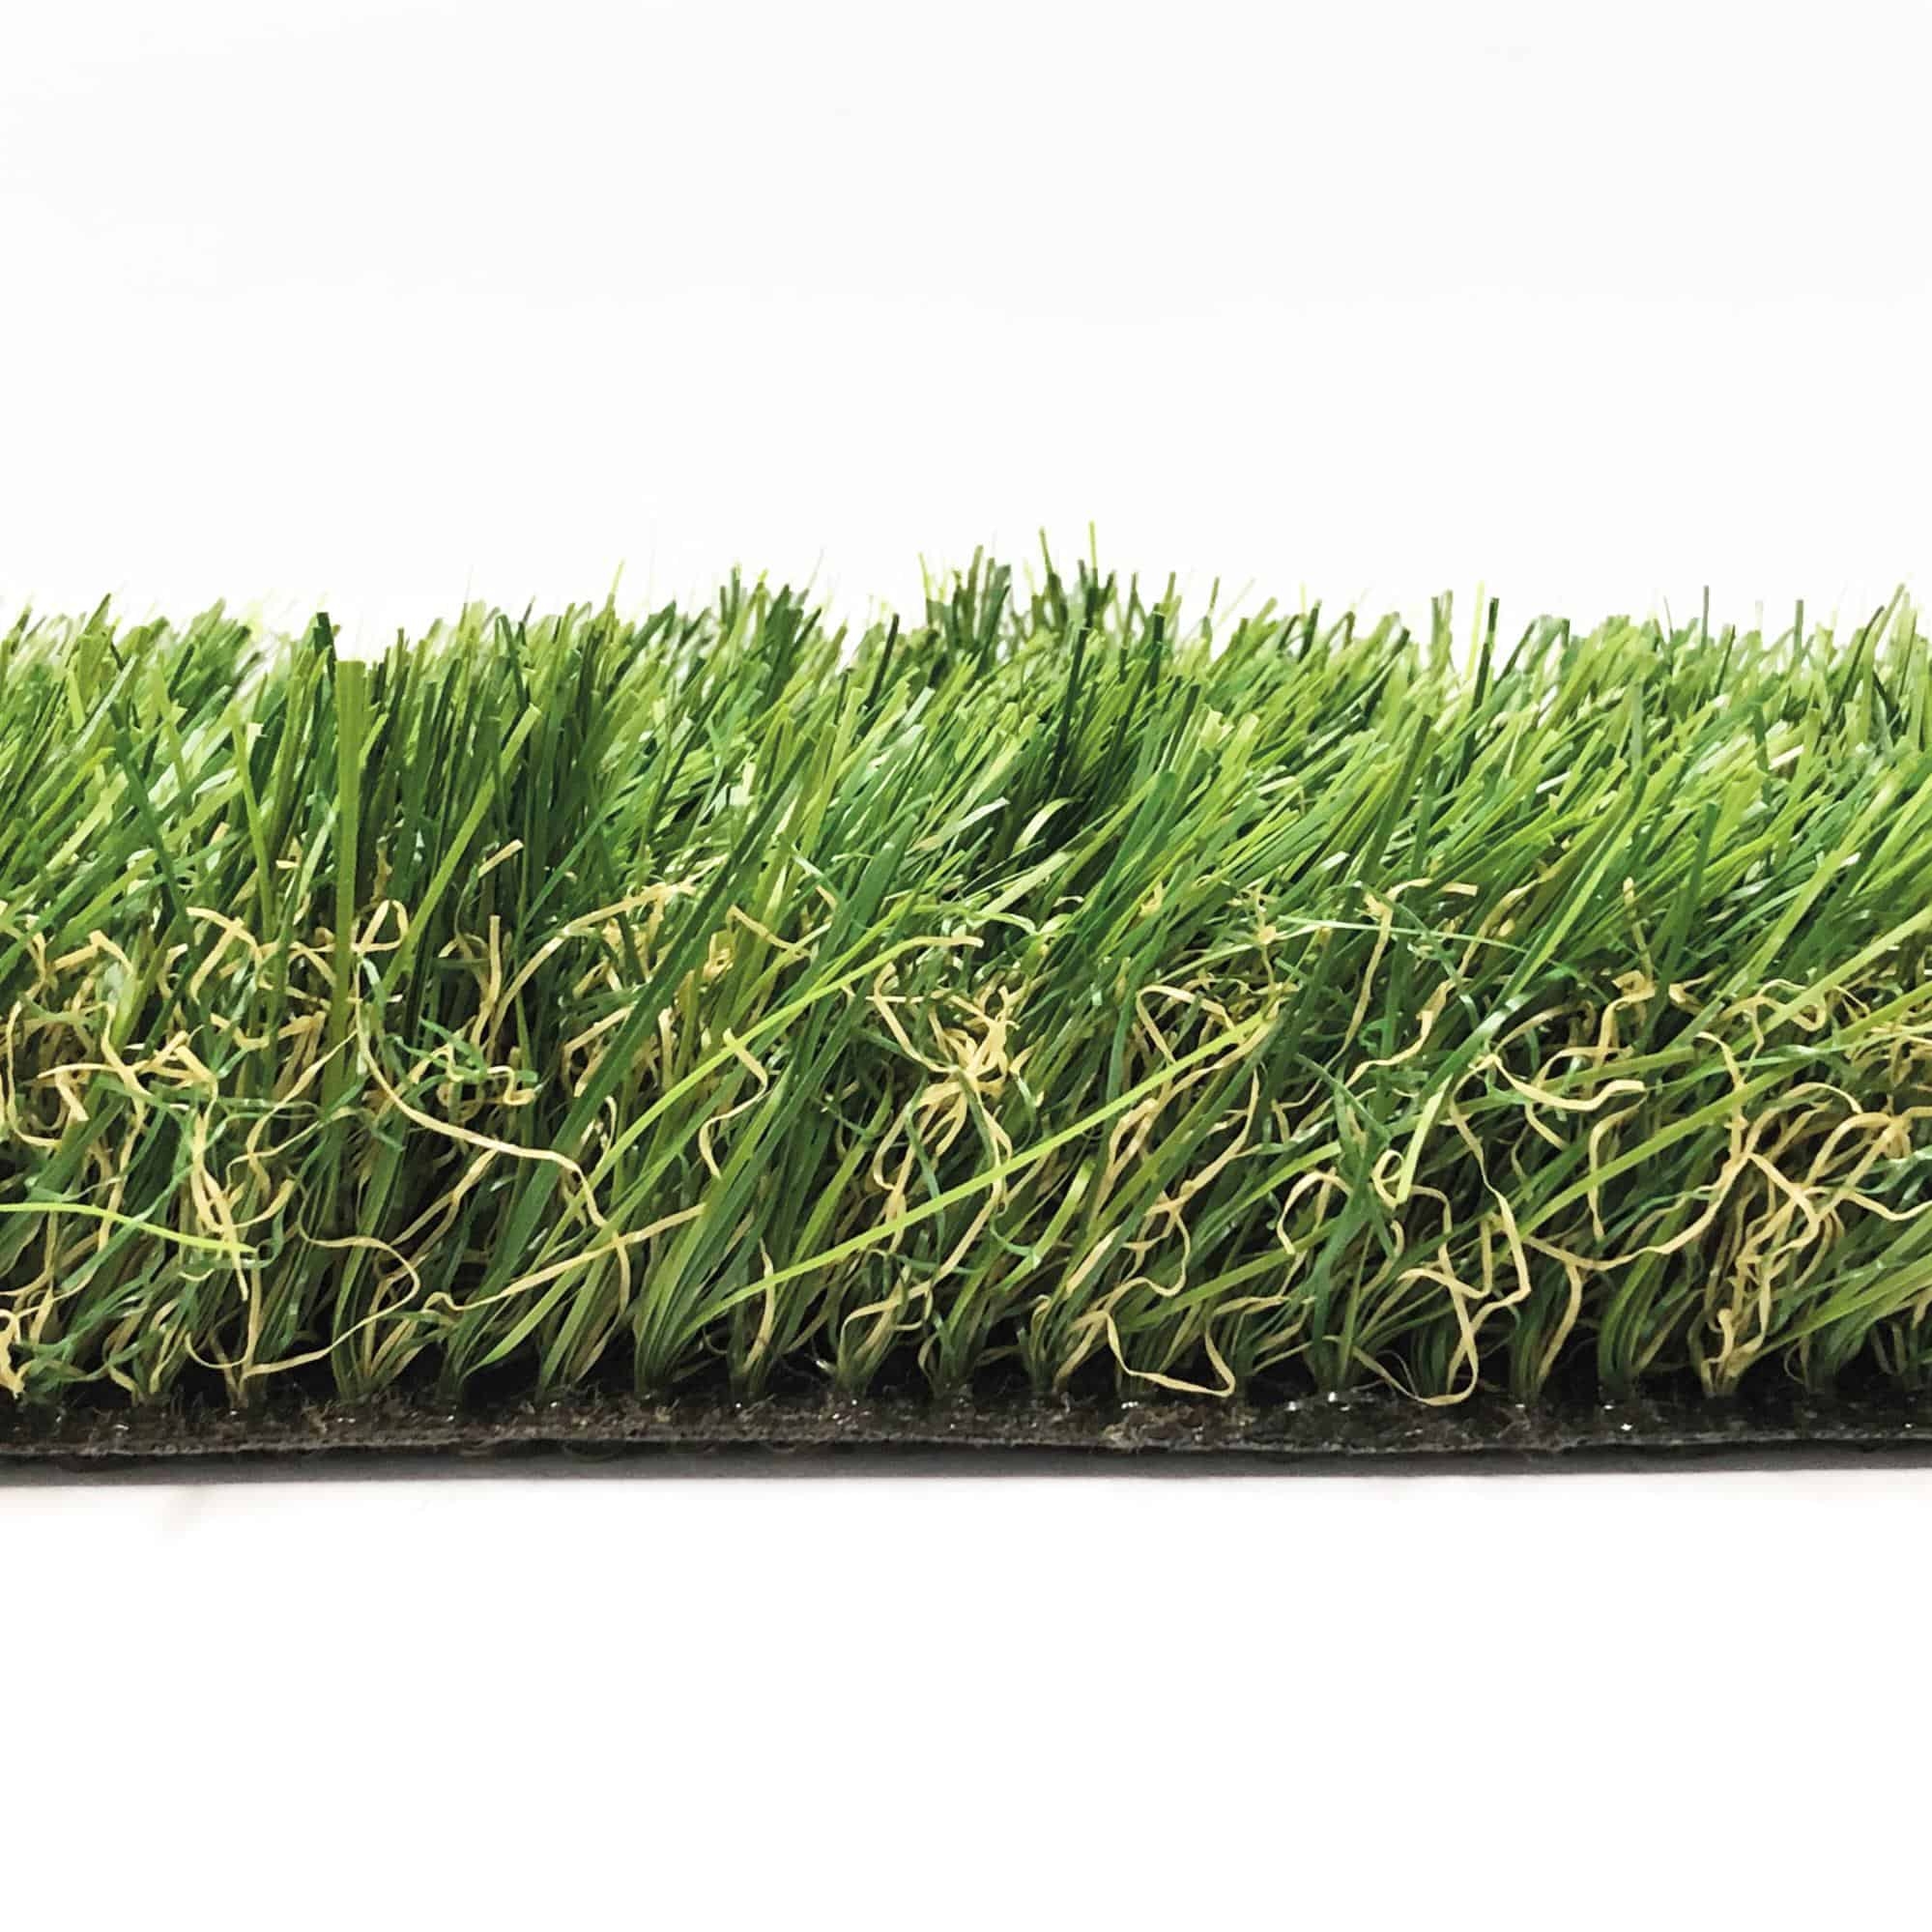 CORE Lawn Natural Artificial Grass 4m Wide Roll 2m